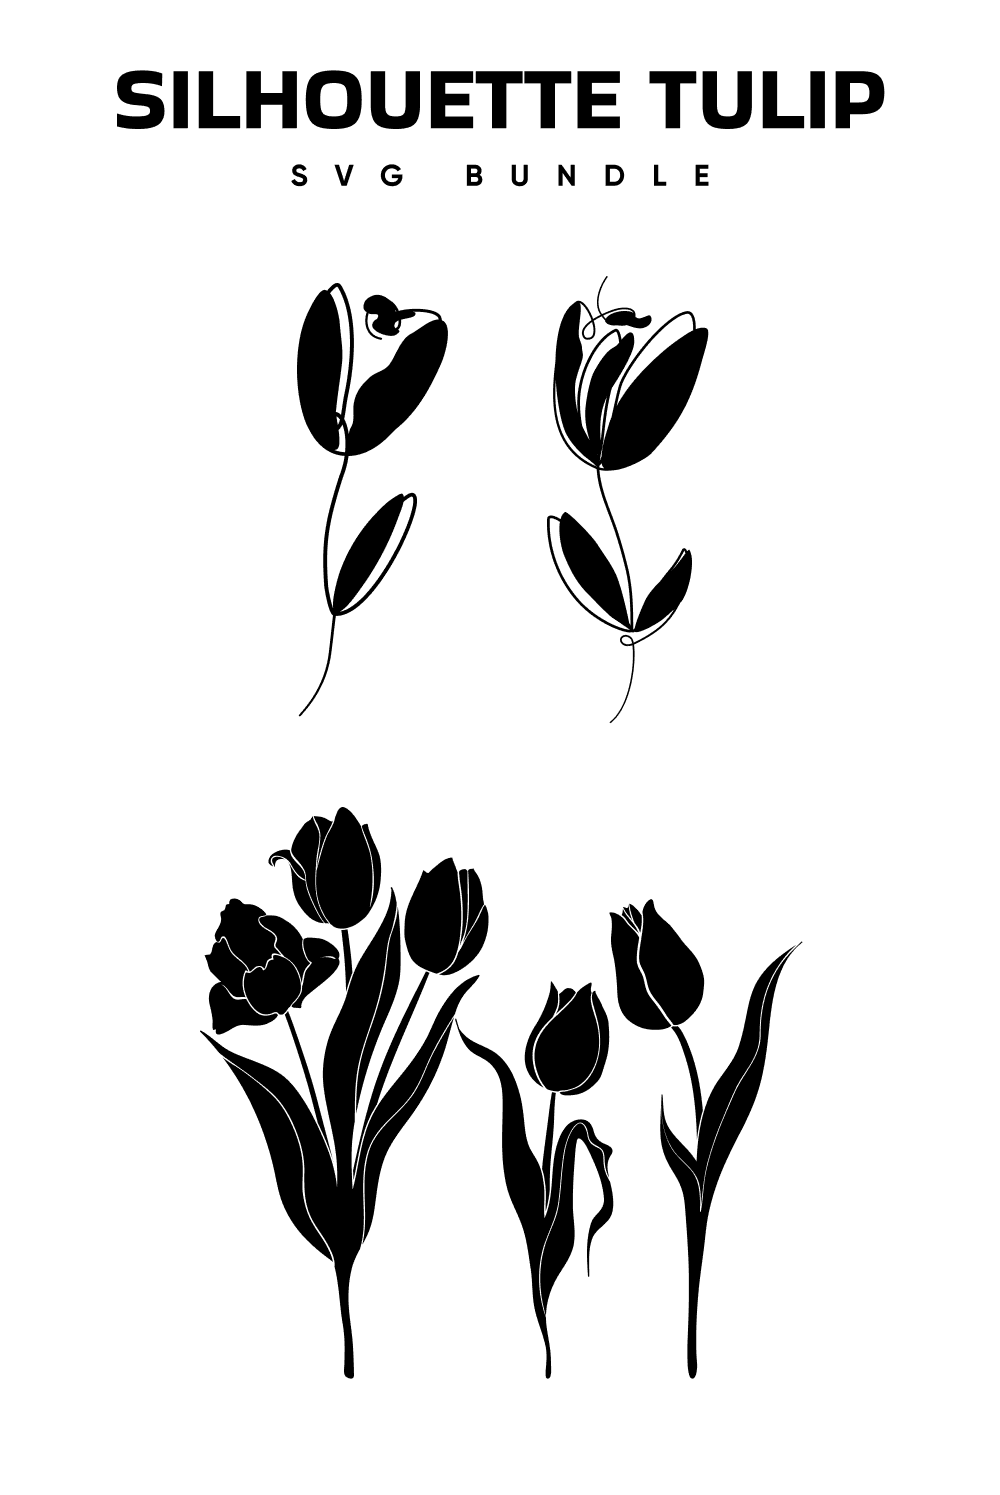 Silhouette Tulip SVG Bundle, picture for pinterest 1000x1500.